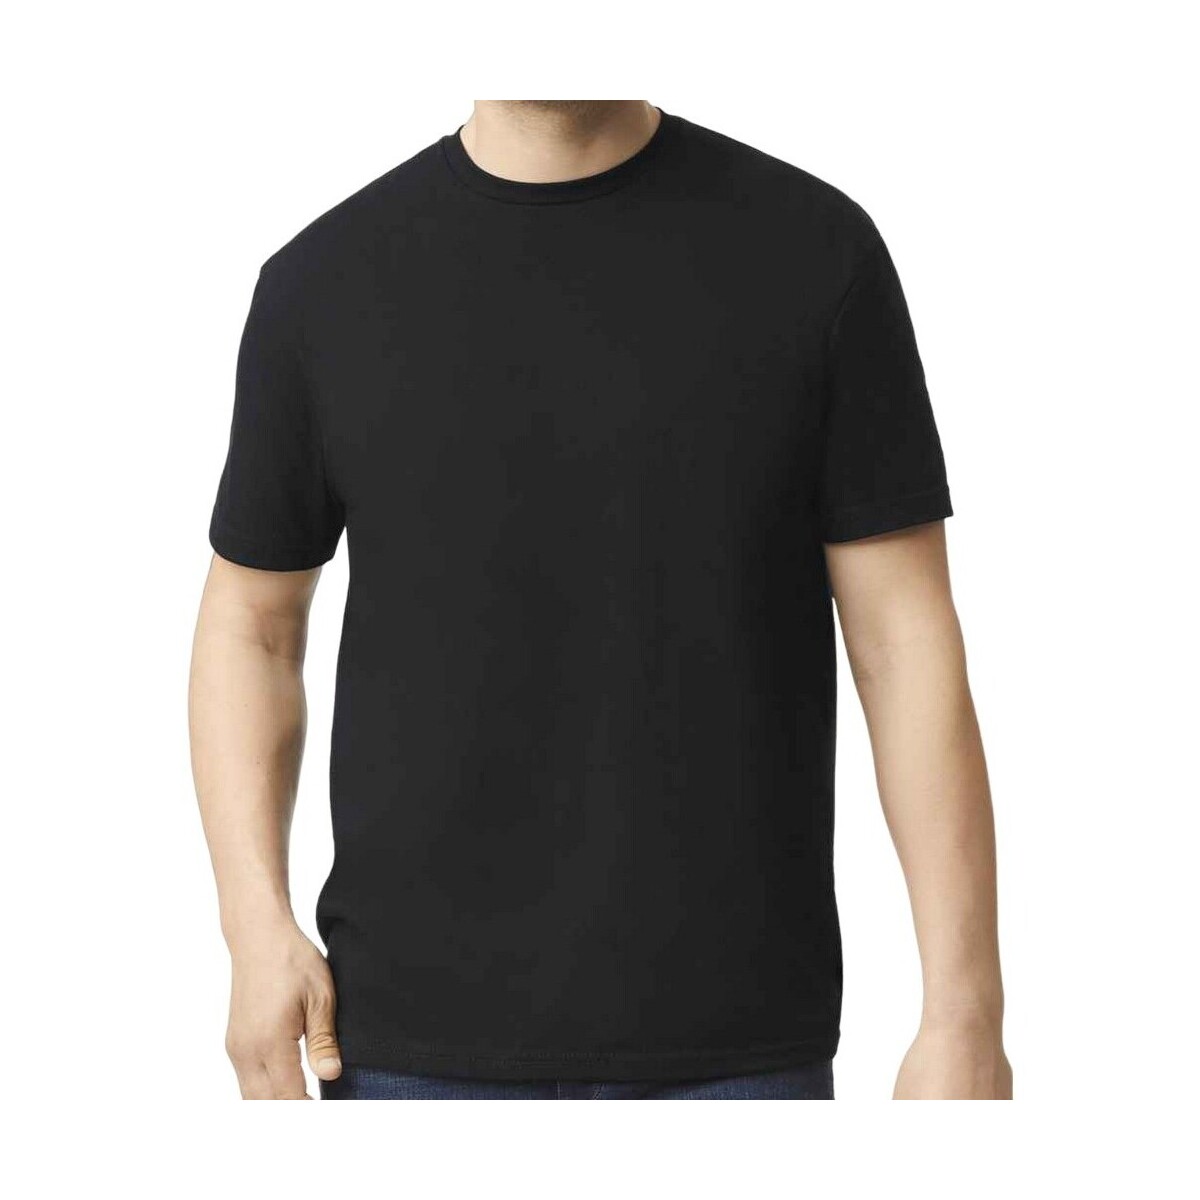 textil Hombre Camisetas manga larga Gildan Softstyle CVC Negro